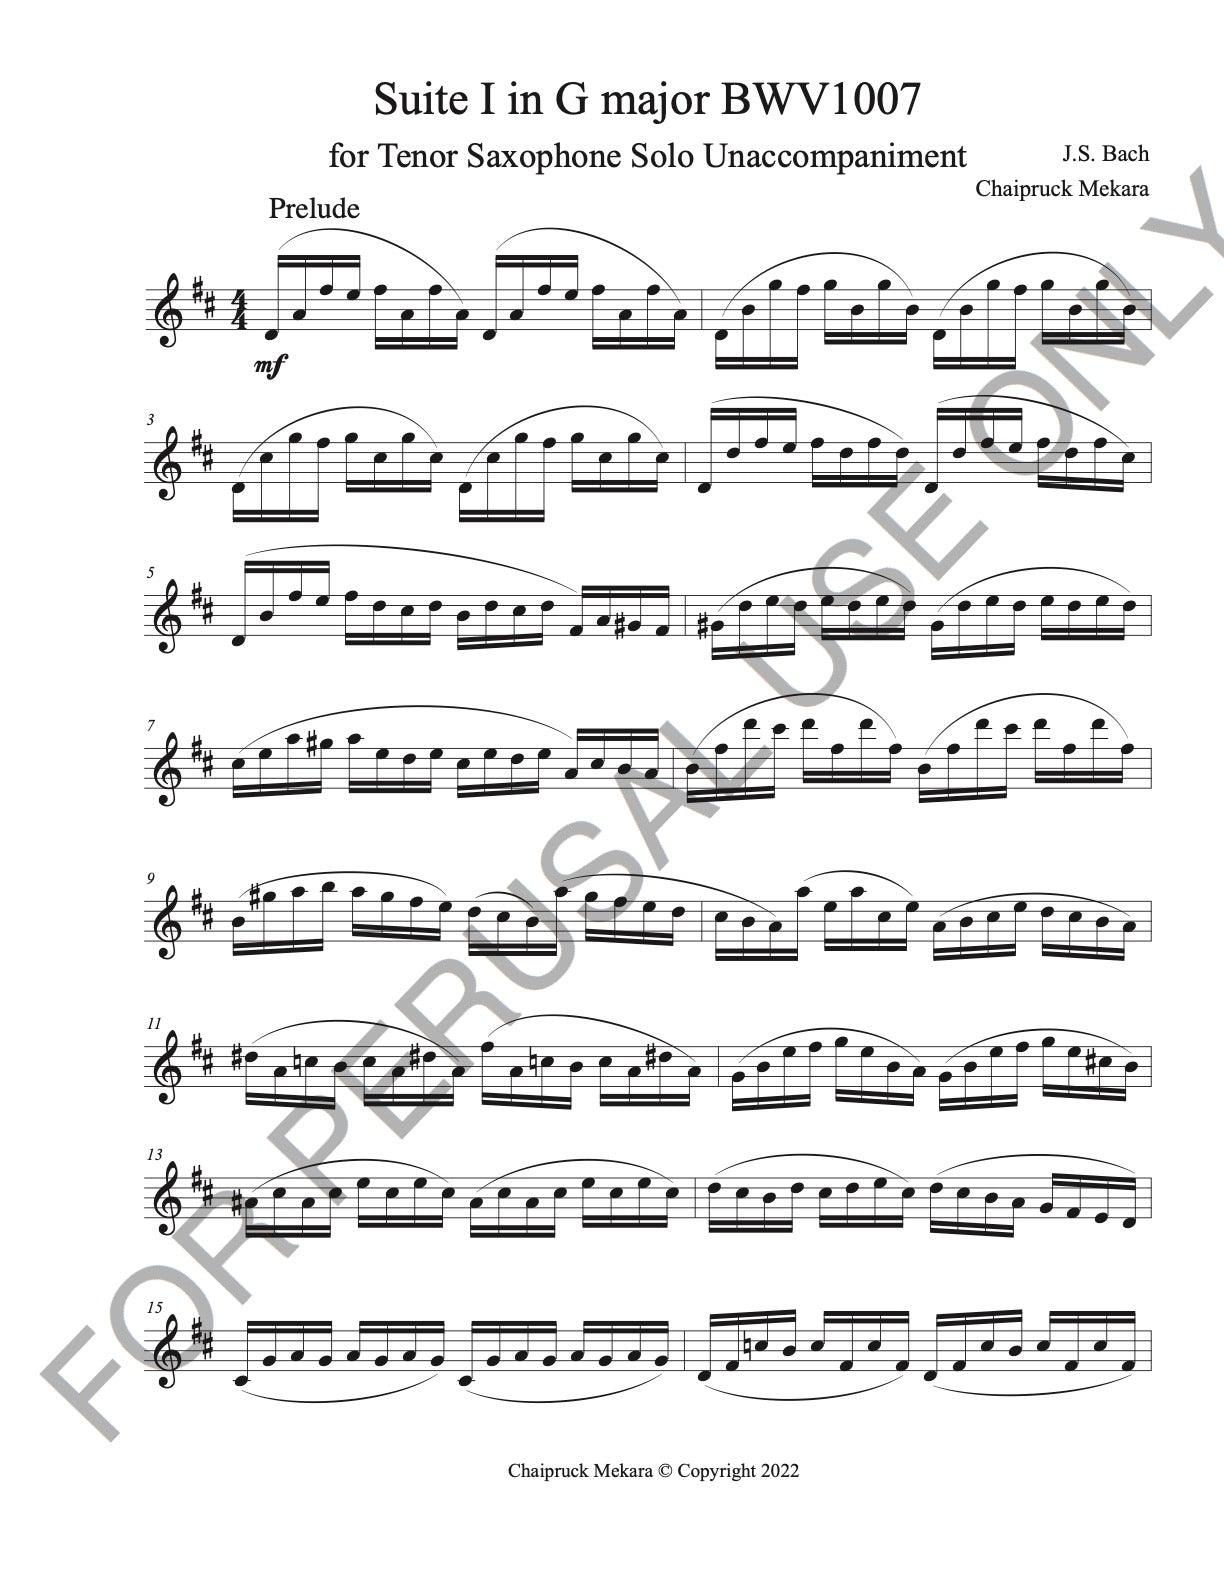 Tenor Saxophone Sheet music: Complete Bach's Cello Suite no.1